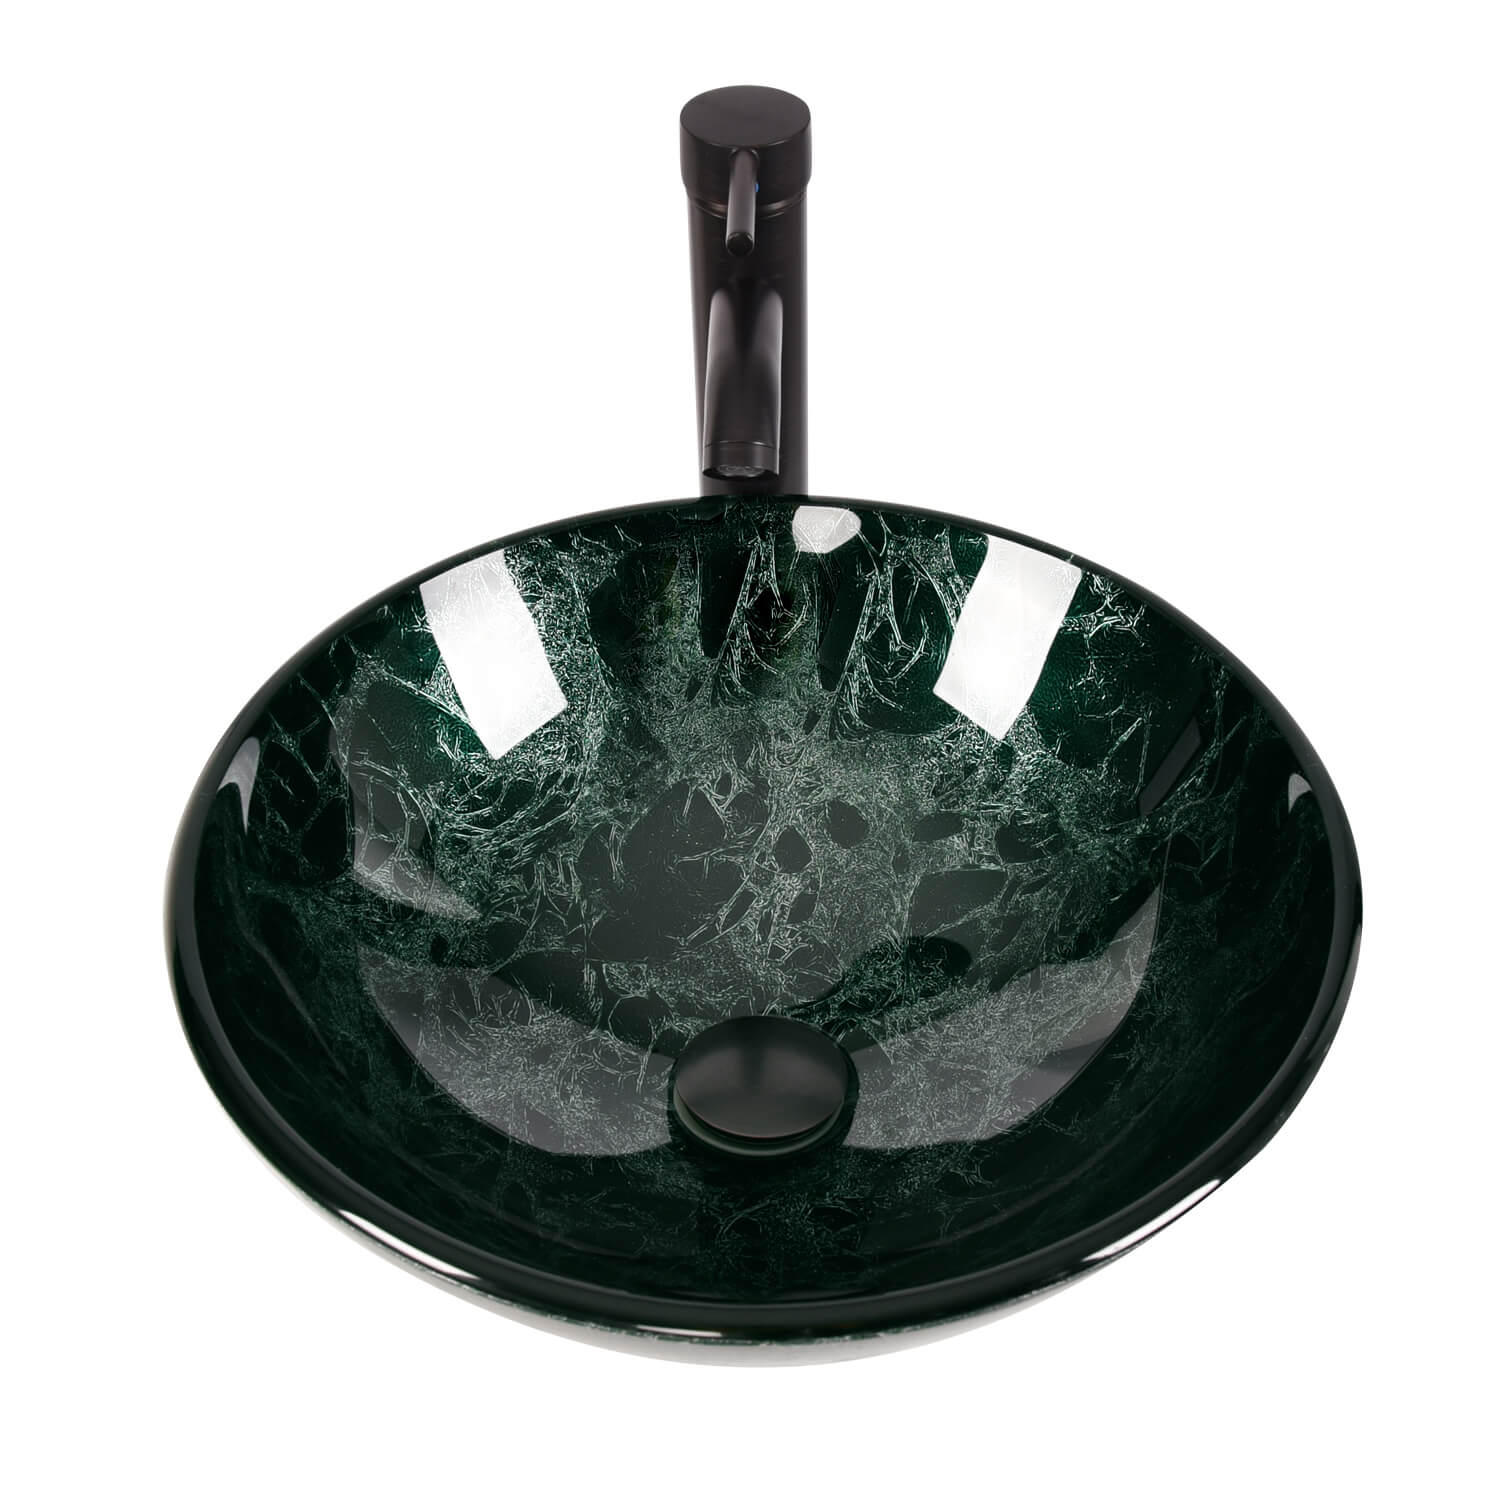 Elecwish Vessel Sinks Bathroom Artistic Vessel Sink Glass Bowl Faucet Drain Combo,Green